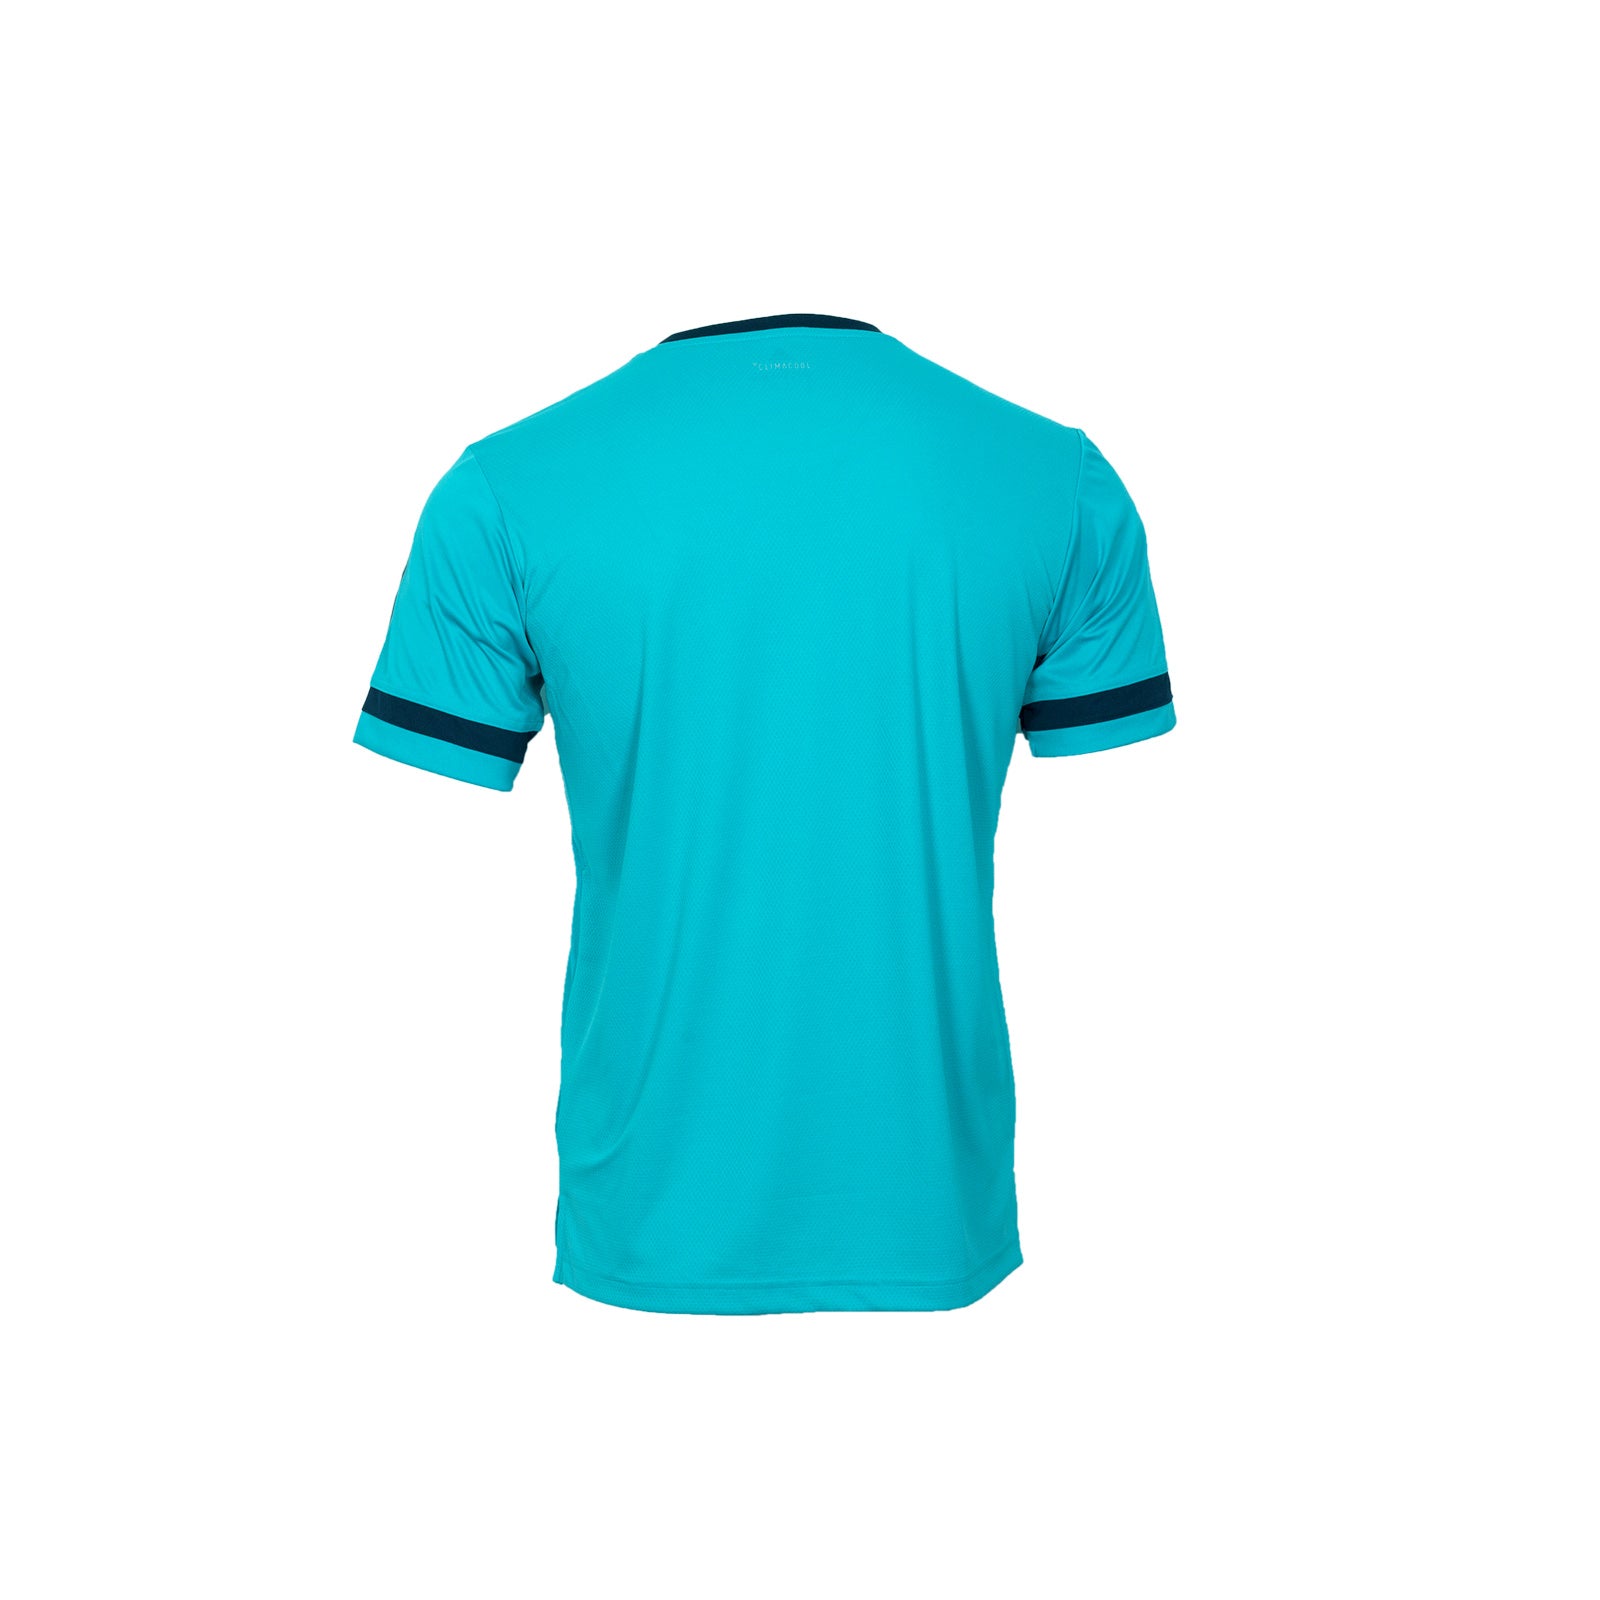 Adidas CLUB 3 Stripes Herren Tennis T-Shirt Sportshirt Climacool türkis D93023 - Brand Dealers Arena e.K. - BDA24